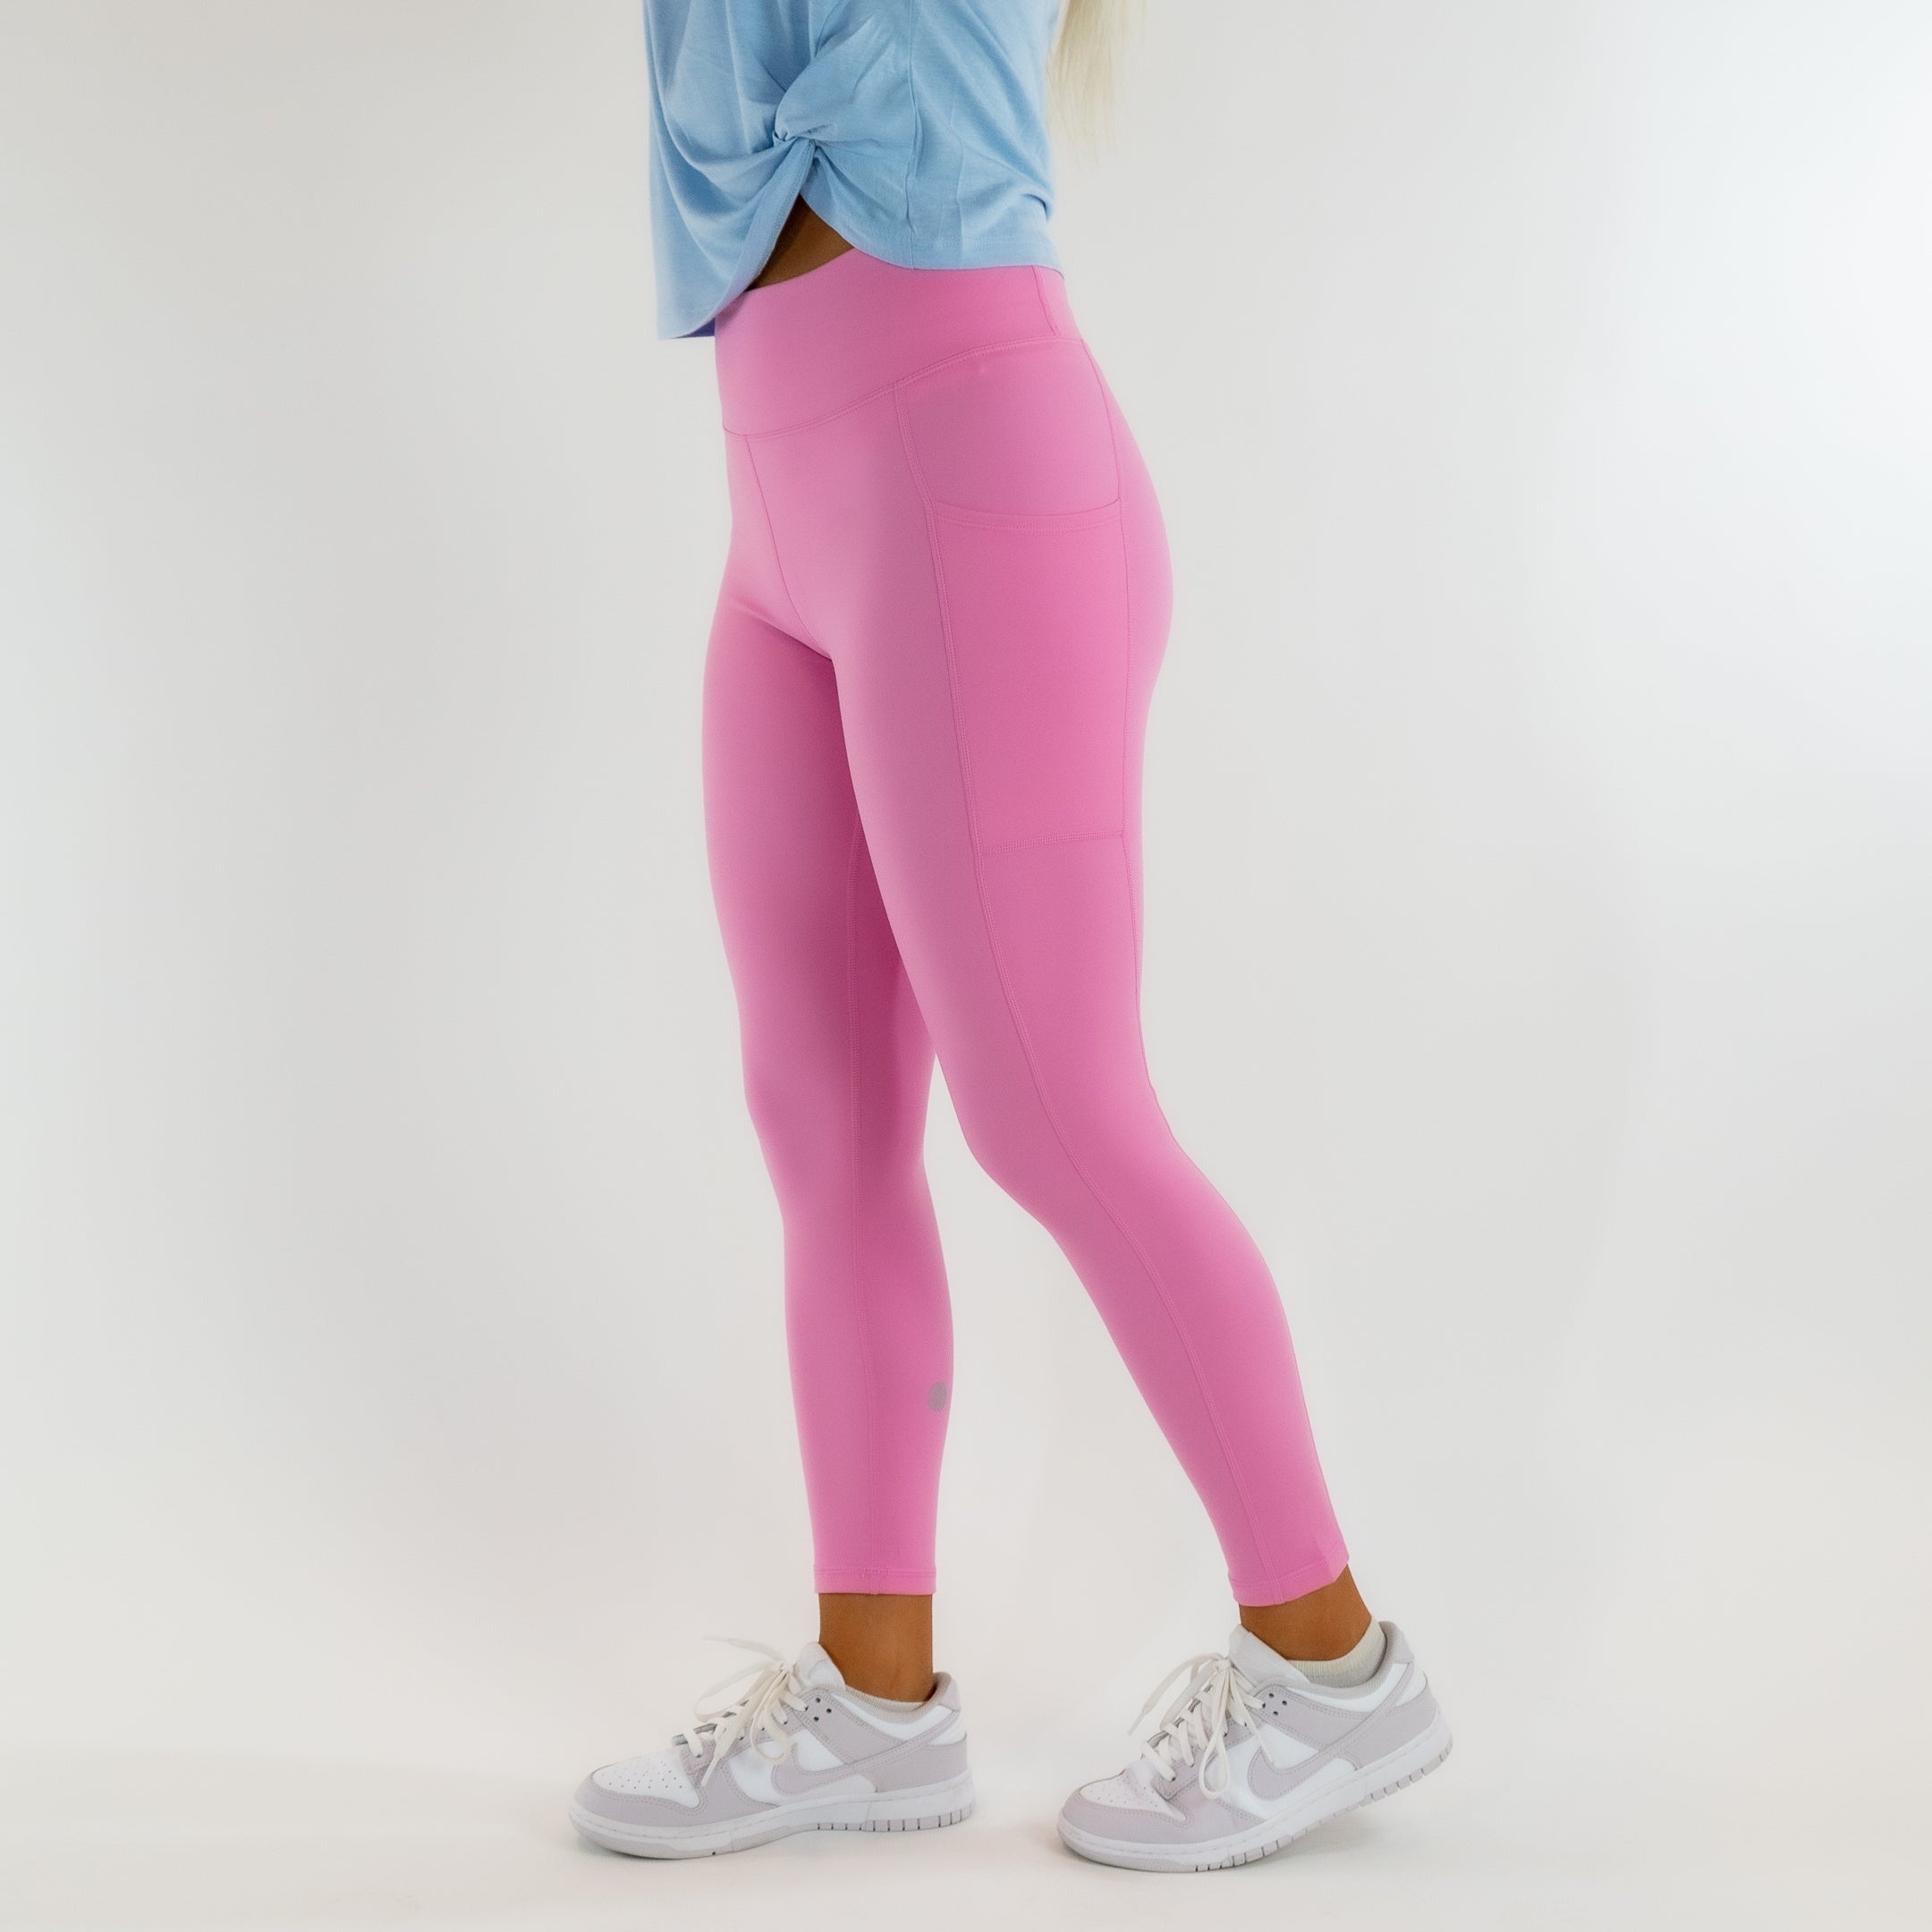 Lululemon Legging Align De Cintura Alta - Farfetch  Hot pink leggings, Pink  leggings outfit, High waisted leggings